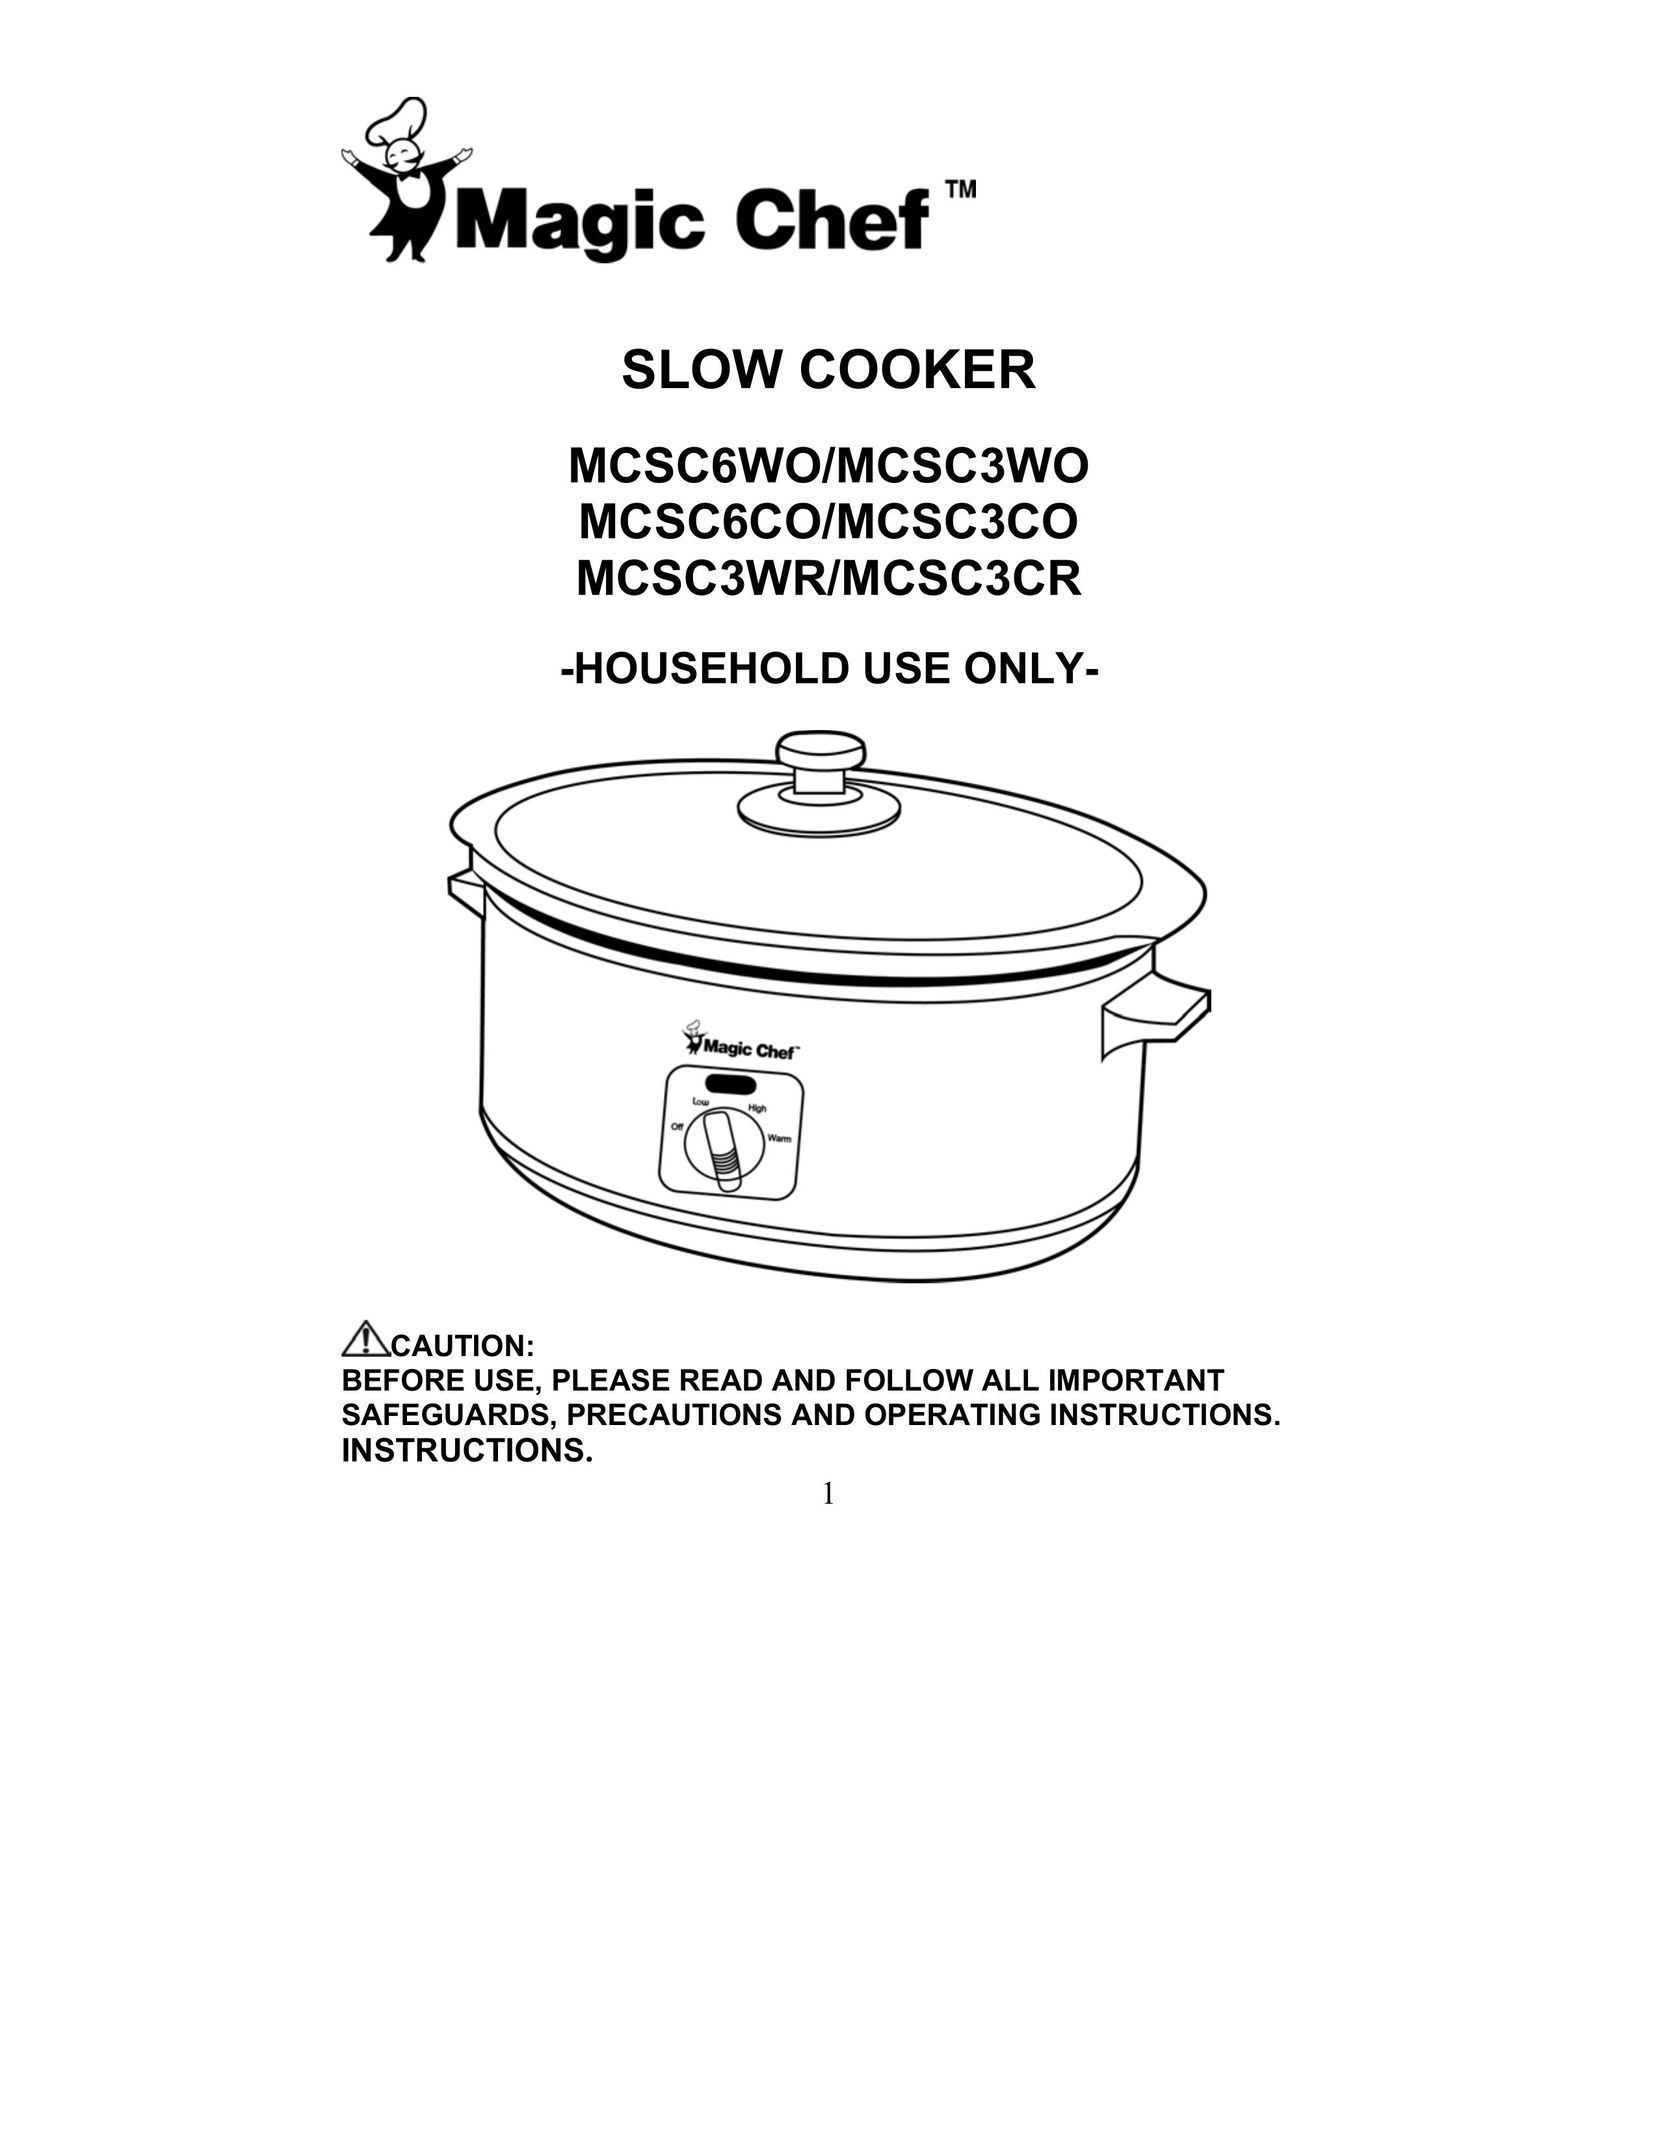 Magic Chef MCSC3CR Cookware User Manual